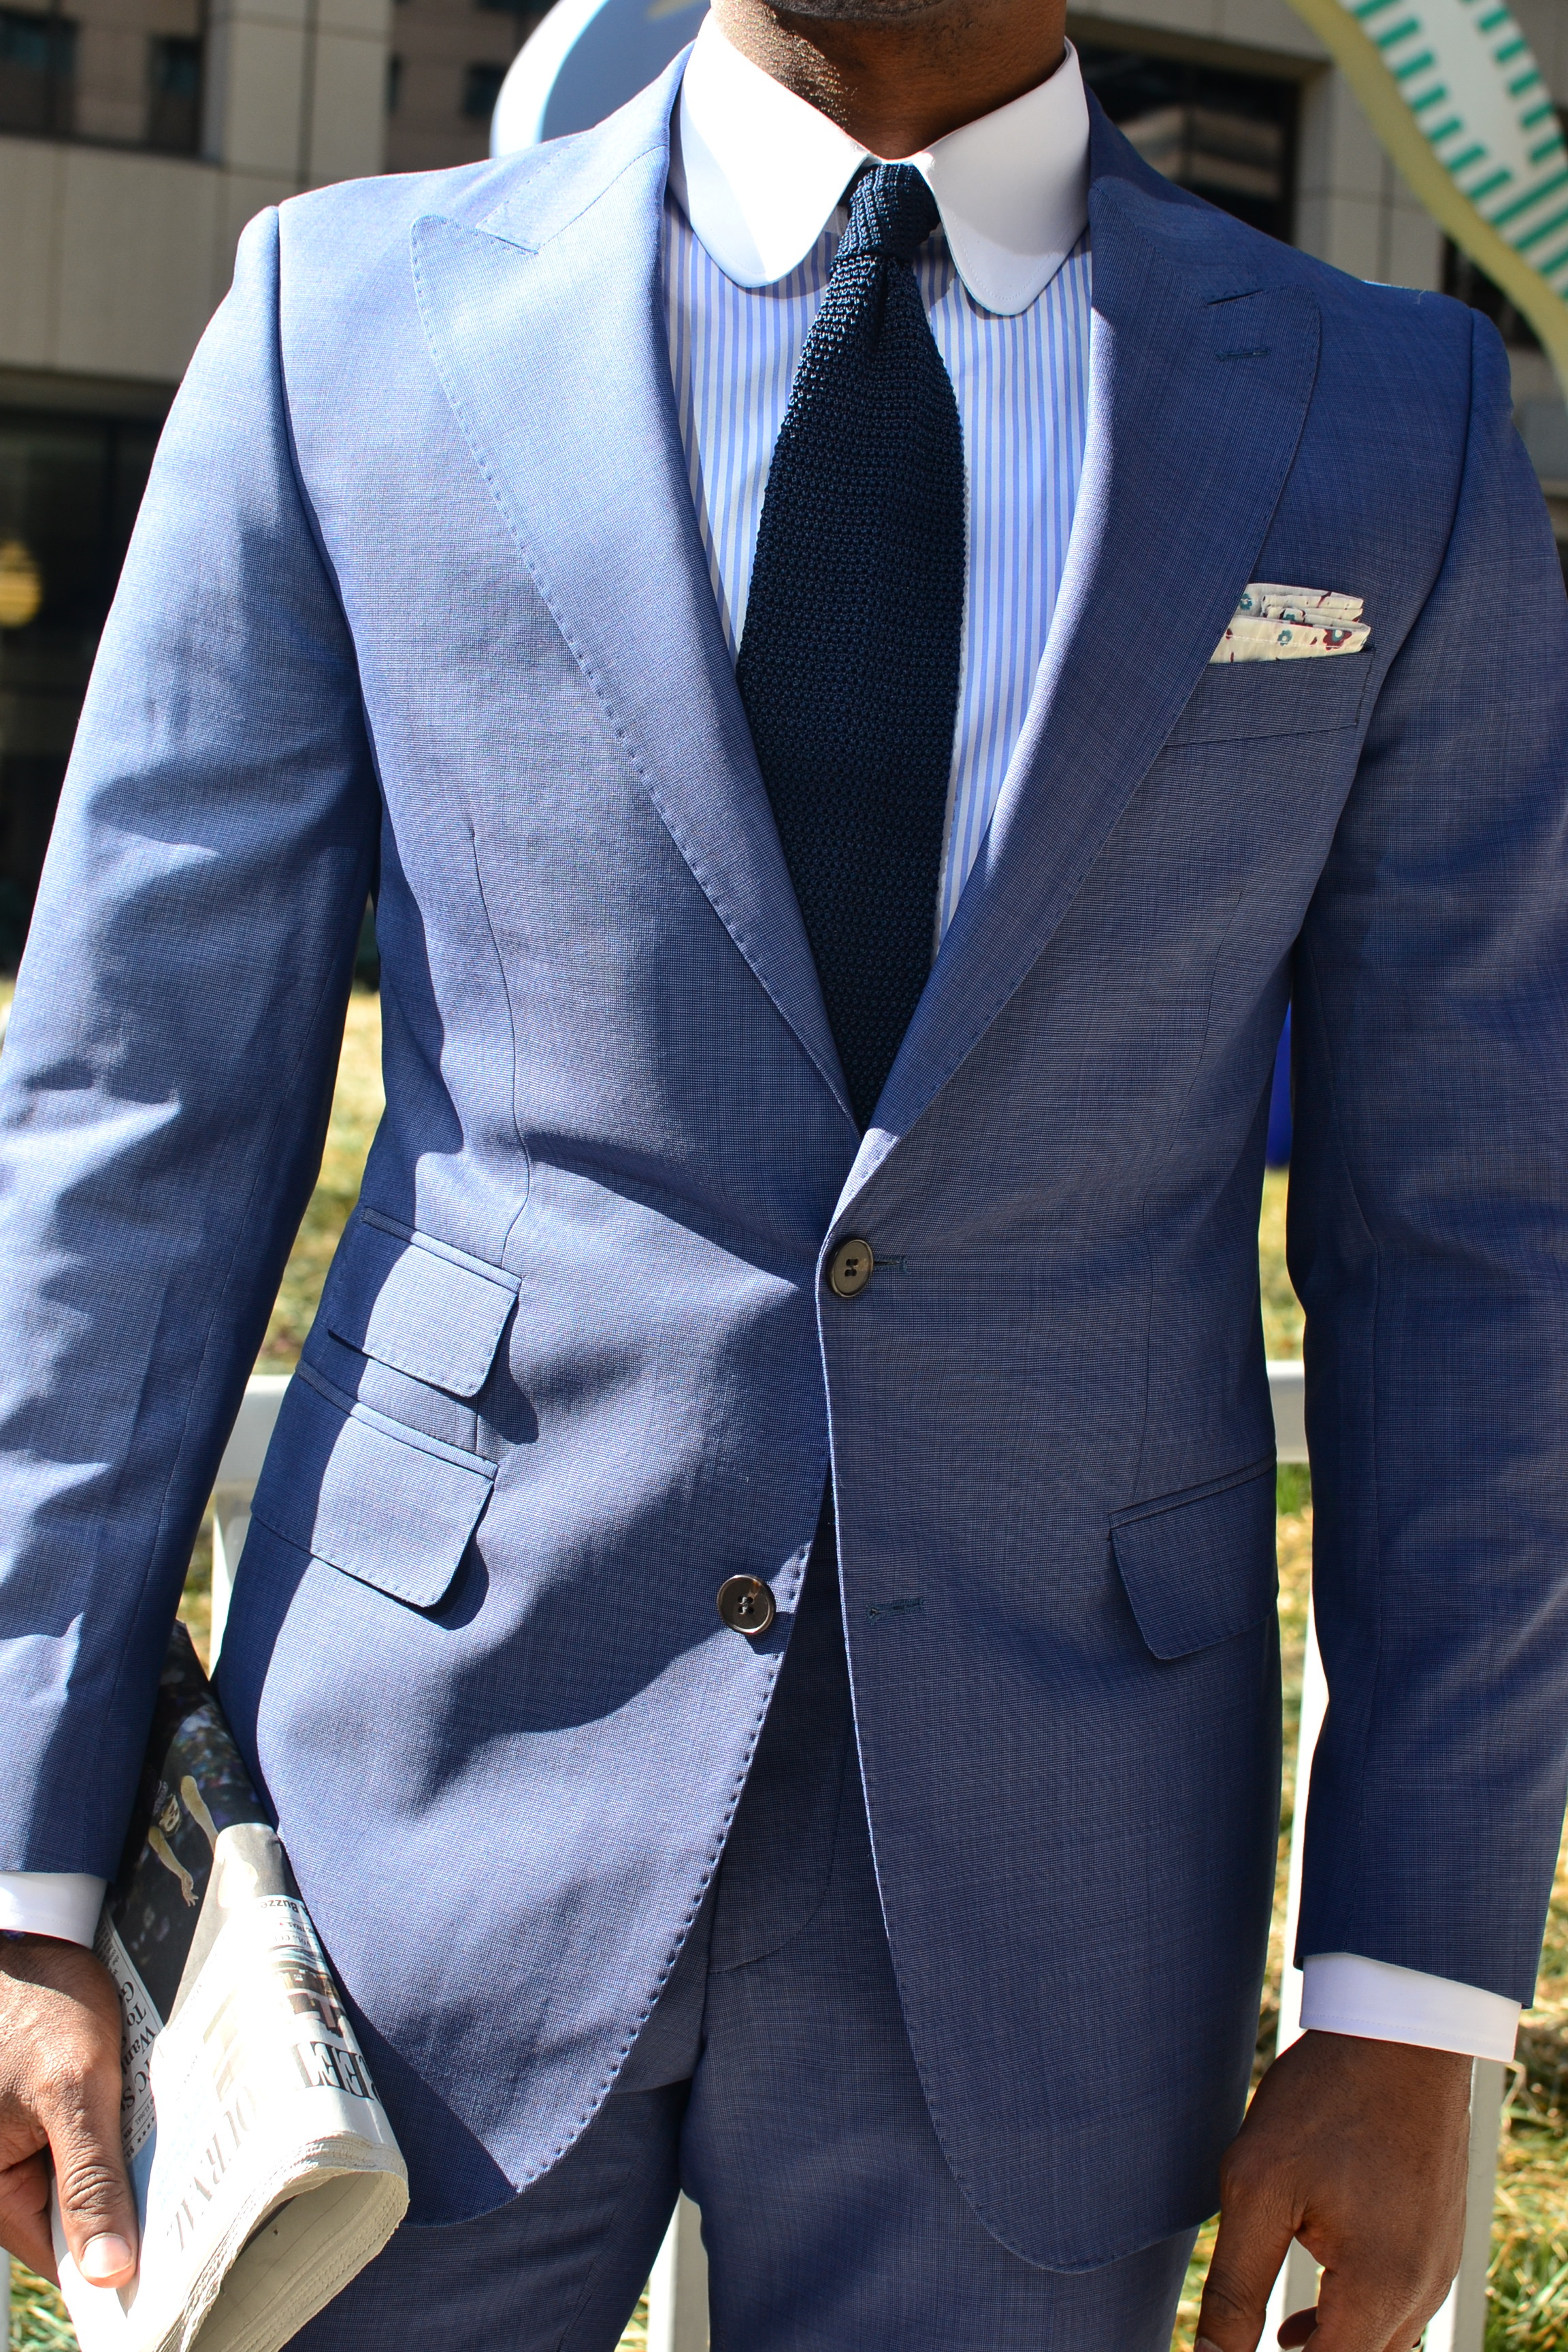 Men's Style Pro x Dragon Inside Spring 15' Suit Collaboration